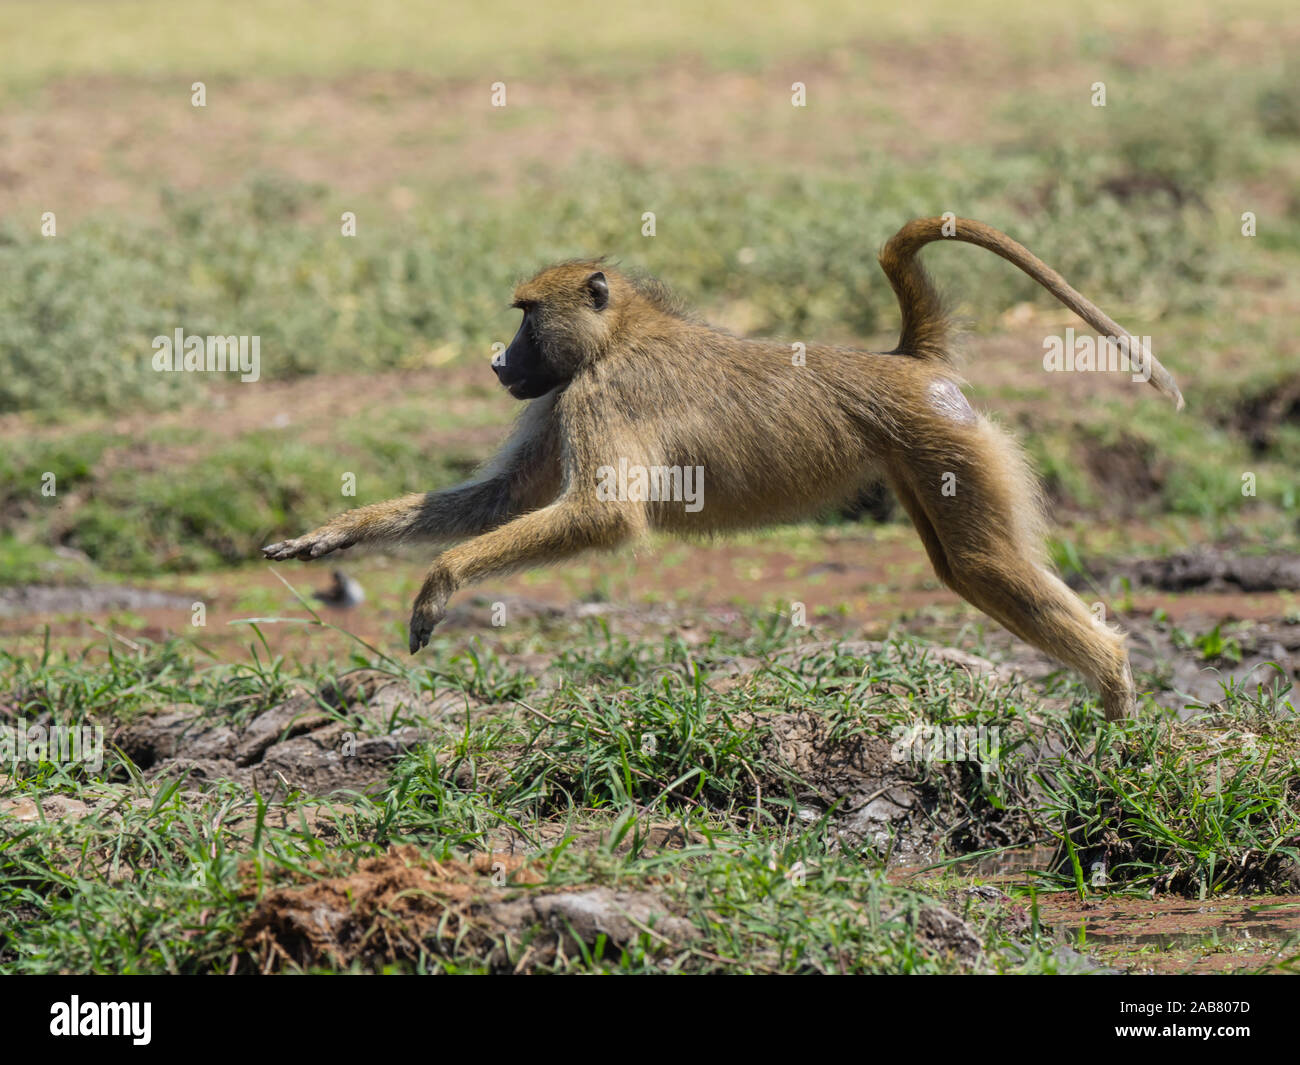 Ein erwachsener Yellow baboon (Papio cynocephalus) sprang im South Luangwa National Park, Sambia, Afrika Stockfoto